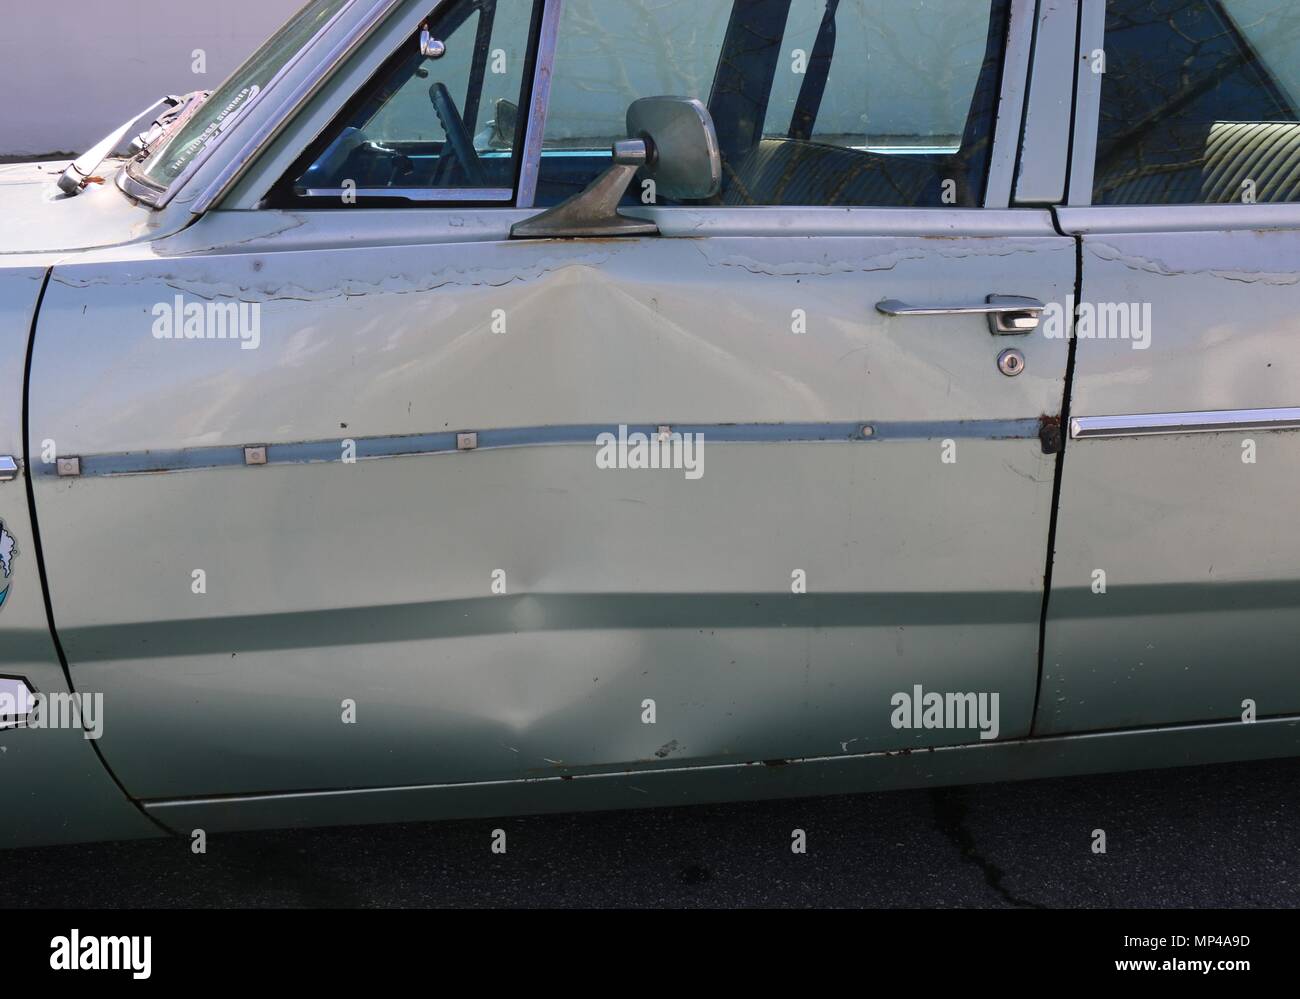 Auto delle -Fotos und -Bildmaterial in hoher Auflösung – Alamy